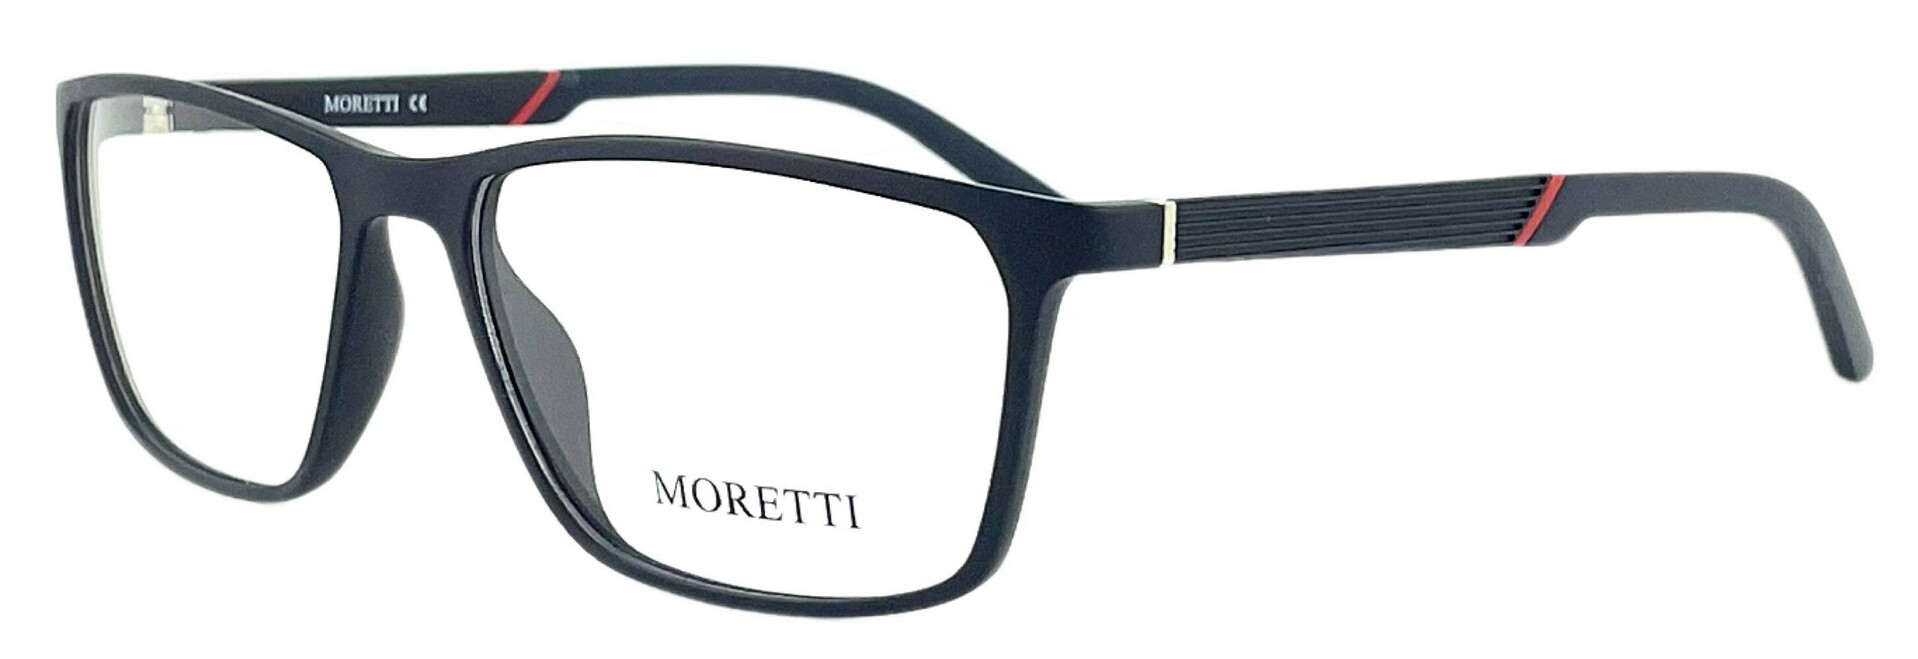 Moretti MZ01-02 C.06 2